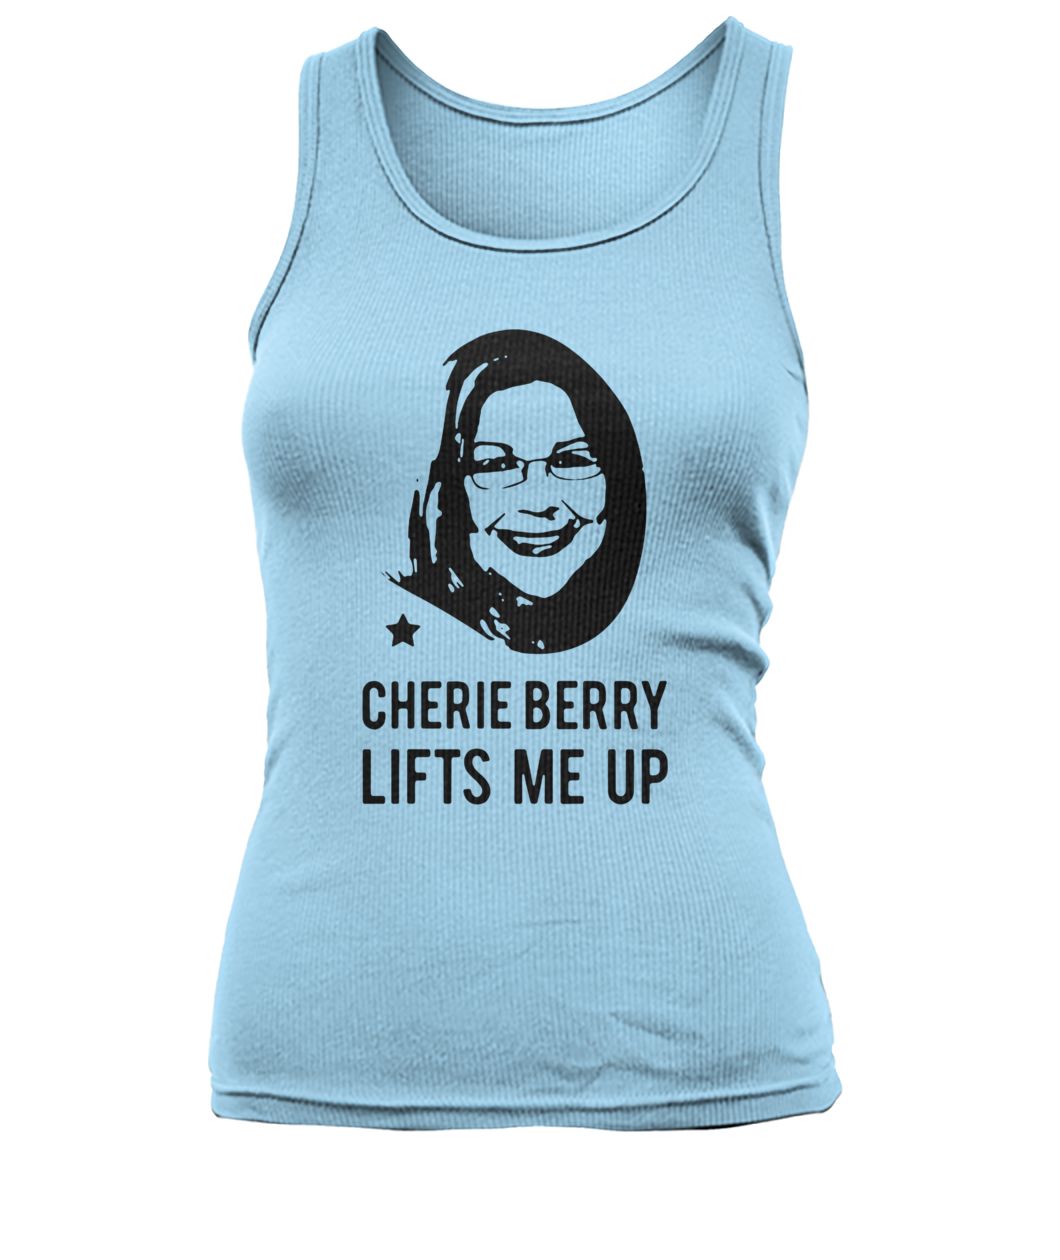 Cherie berry lifts me up women's tank top